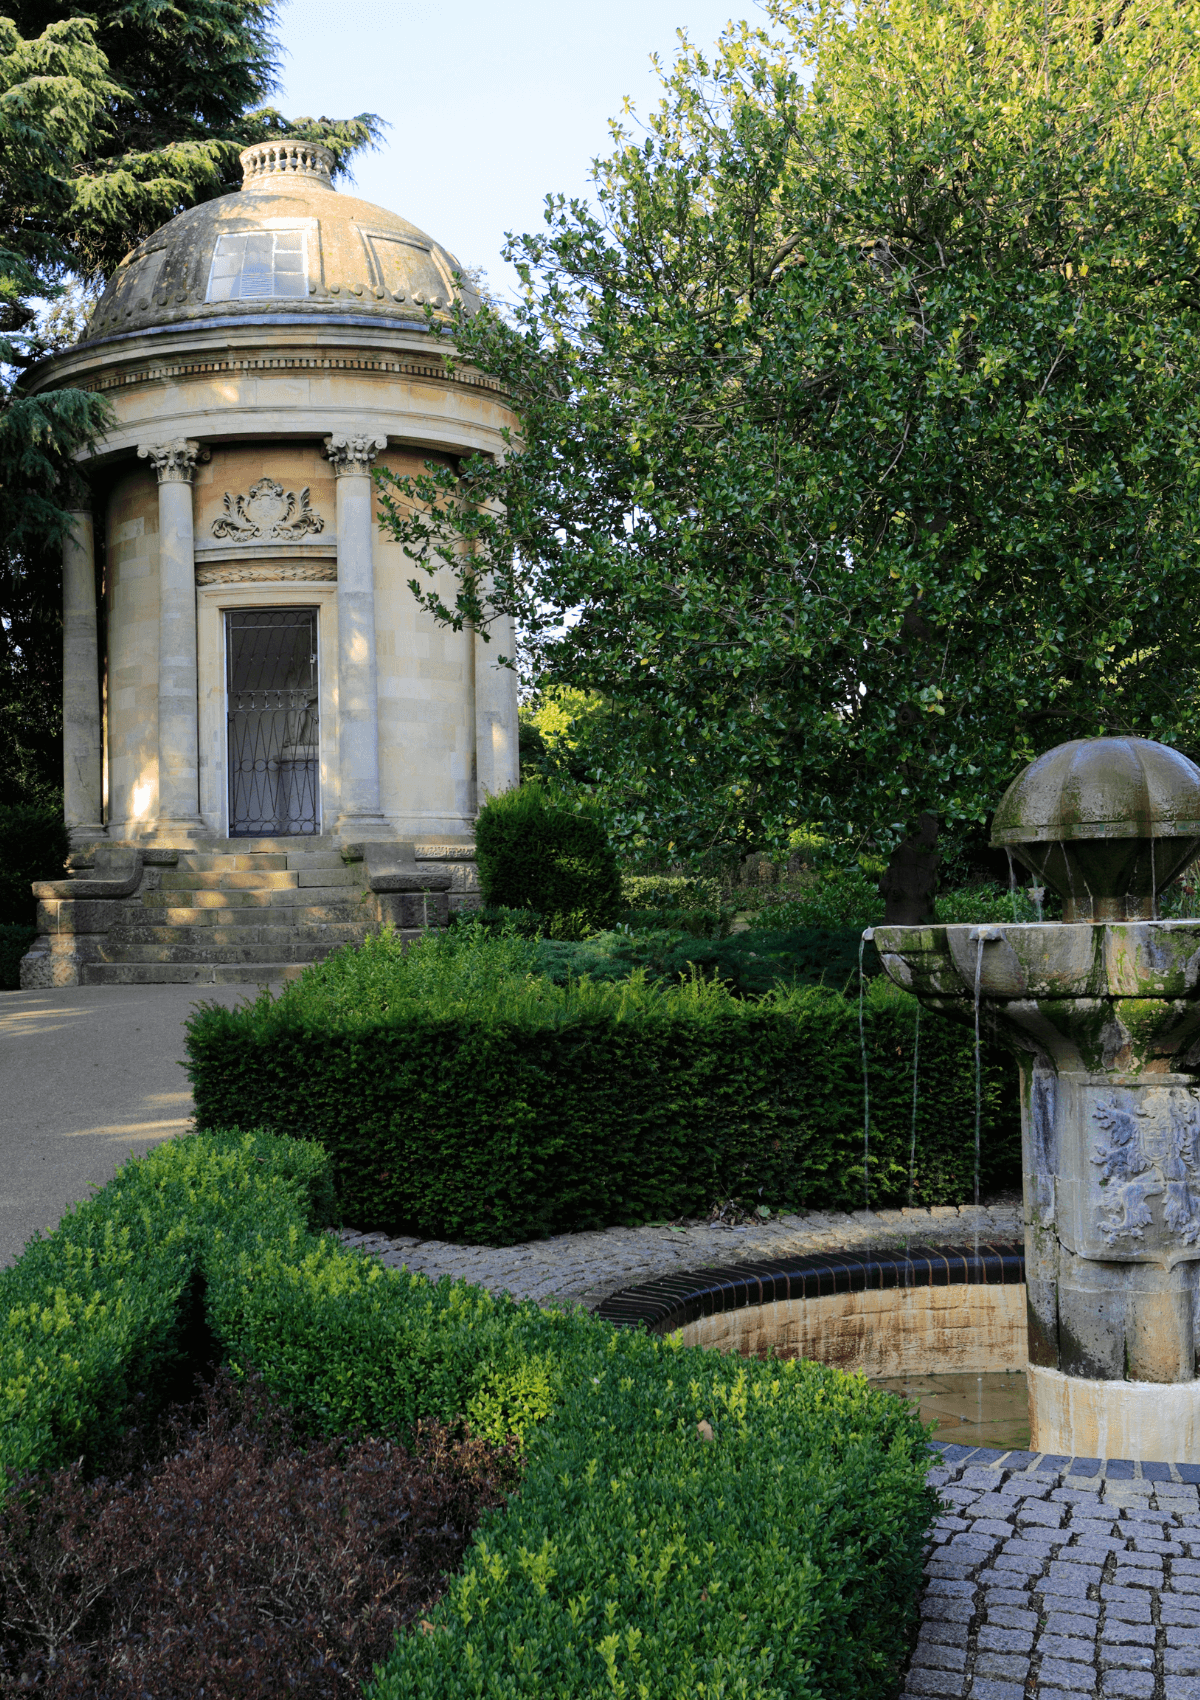 Jephson Gardens in Royal Leamington Spa, England